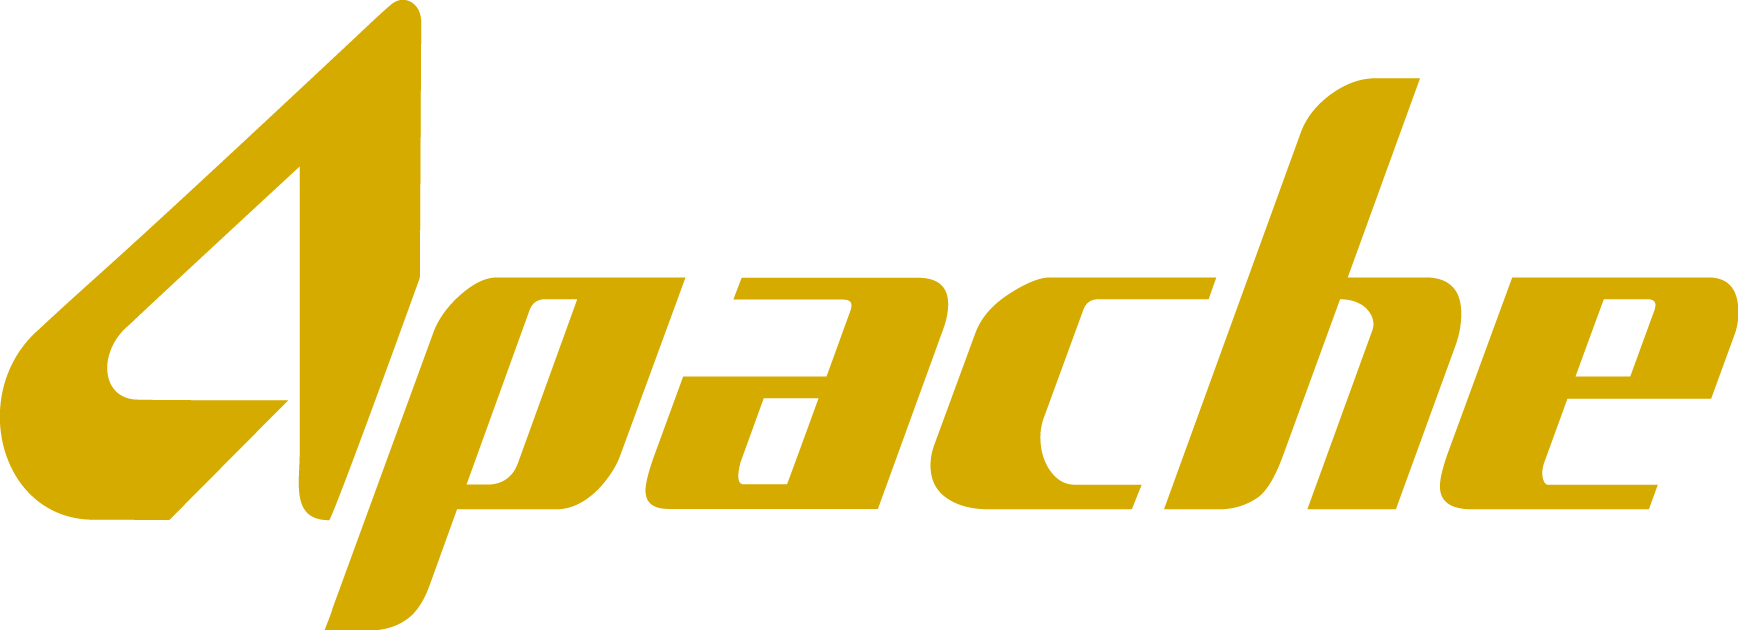 Apache Corporation Logo png